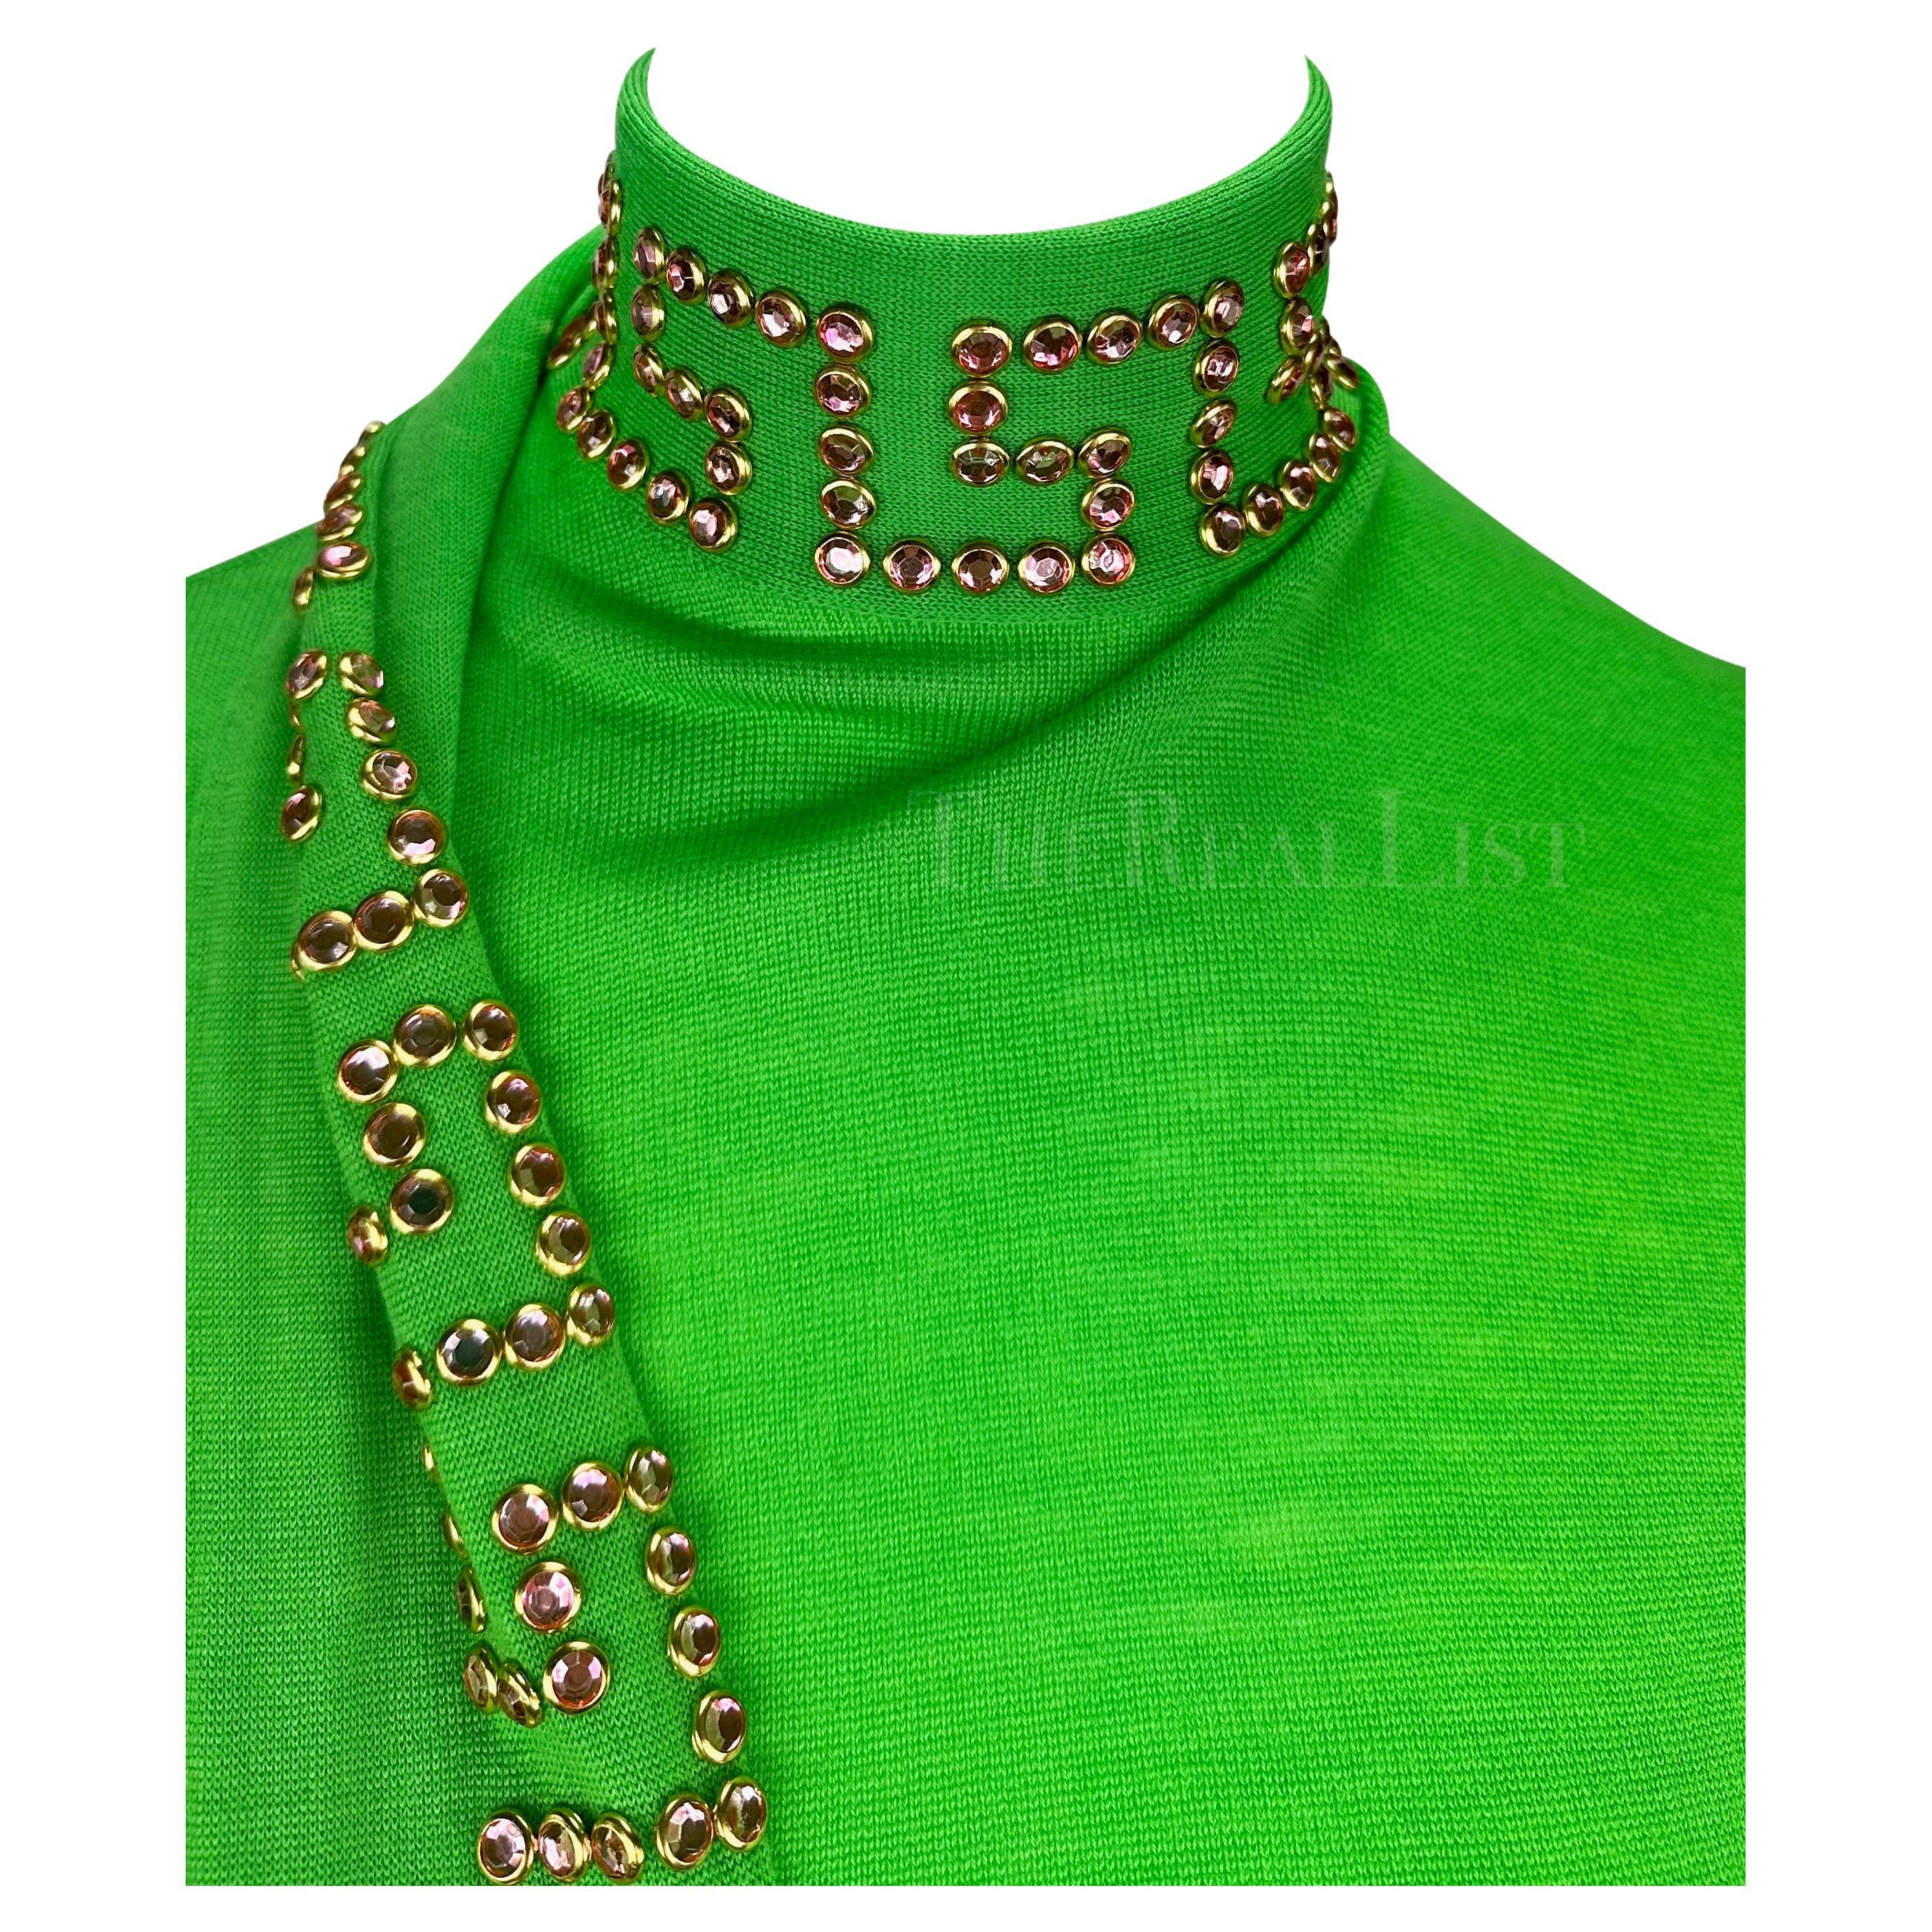 Women's S/S 2000 Gianni Versace by Donatella Runway Green Rhinestone Greek Key Knit Top For Sale